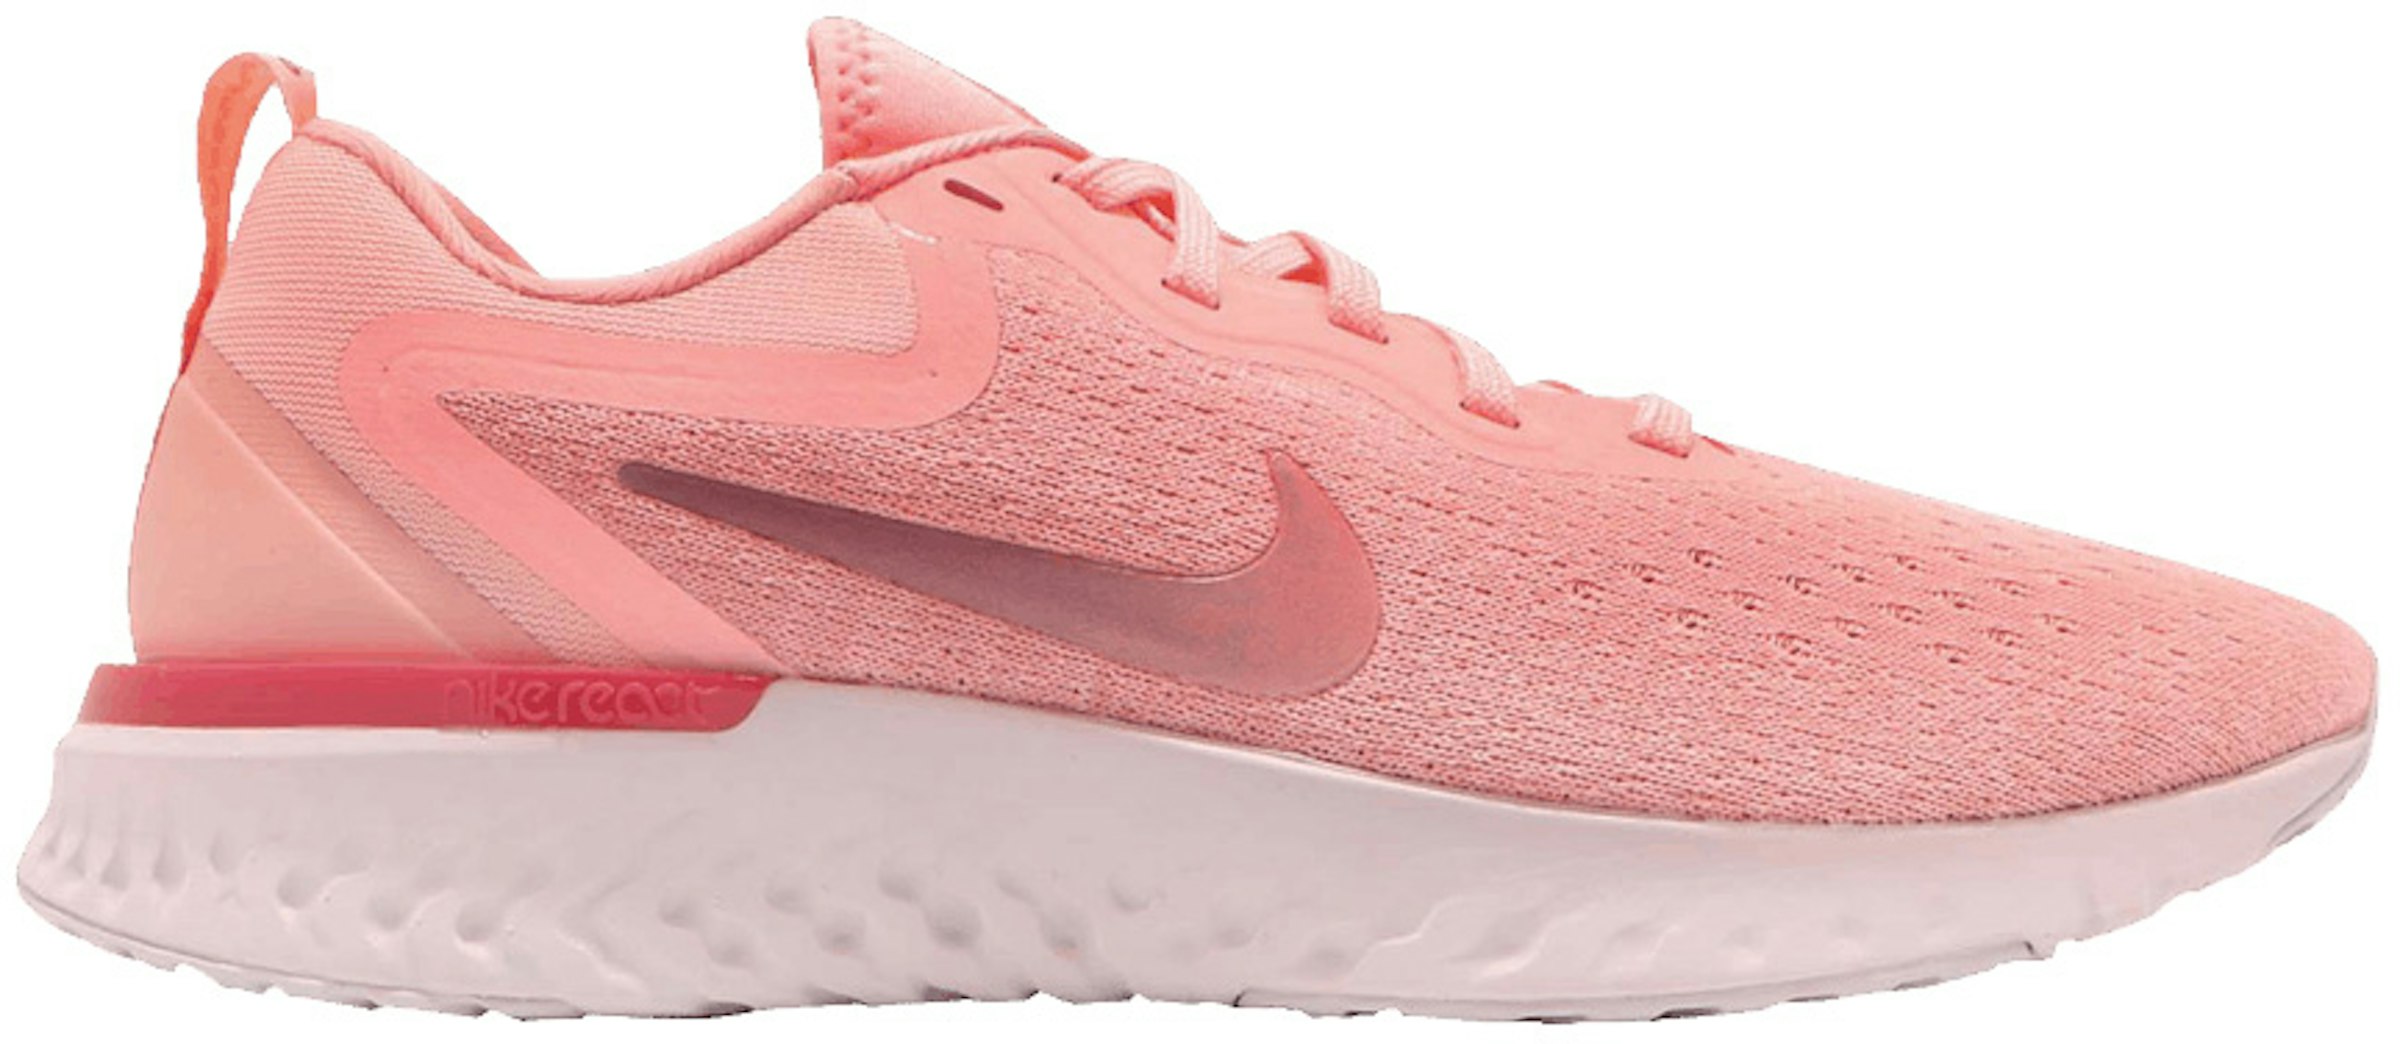 Onderdrukken Balling Uitsluiten Nike Odyssey React Oracle Pink (Women's) - AO9820-601 - GB